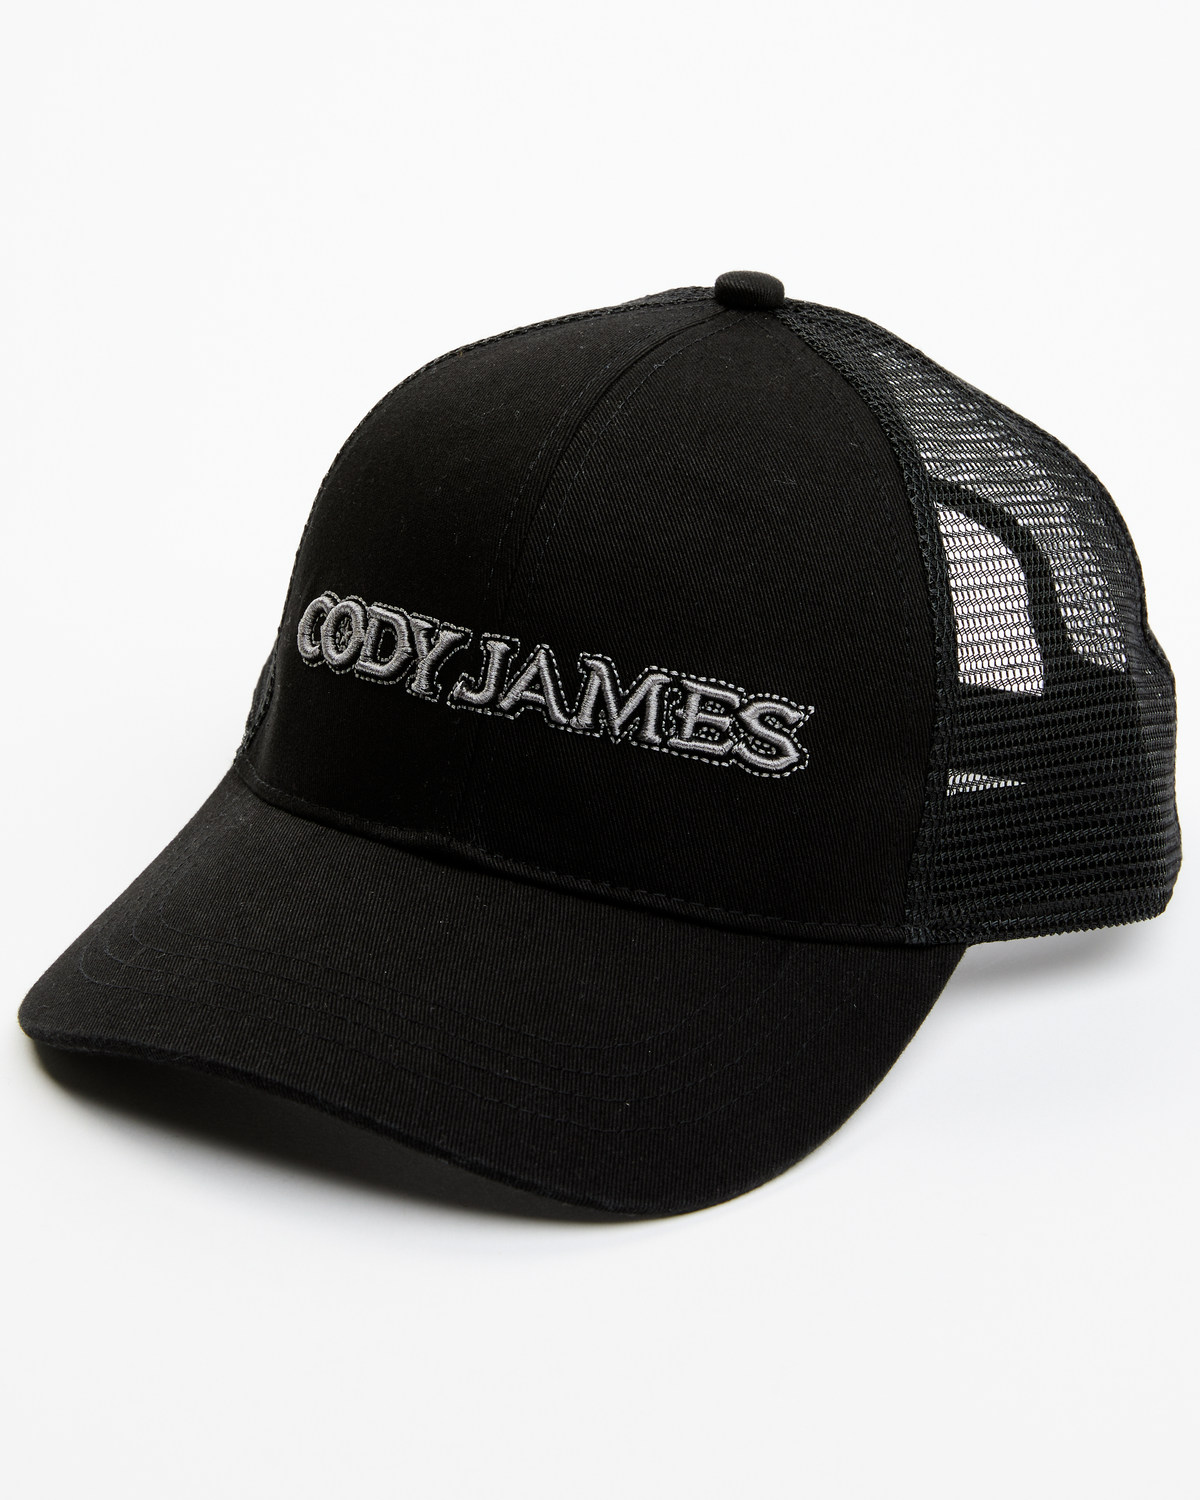 Cody James Men's Embroidered Logo Ball Cap